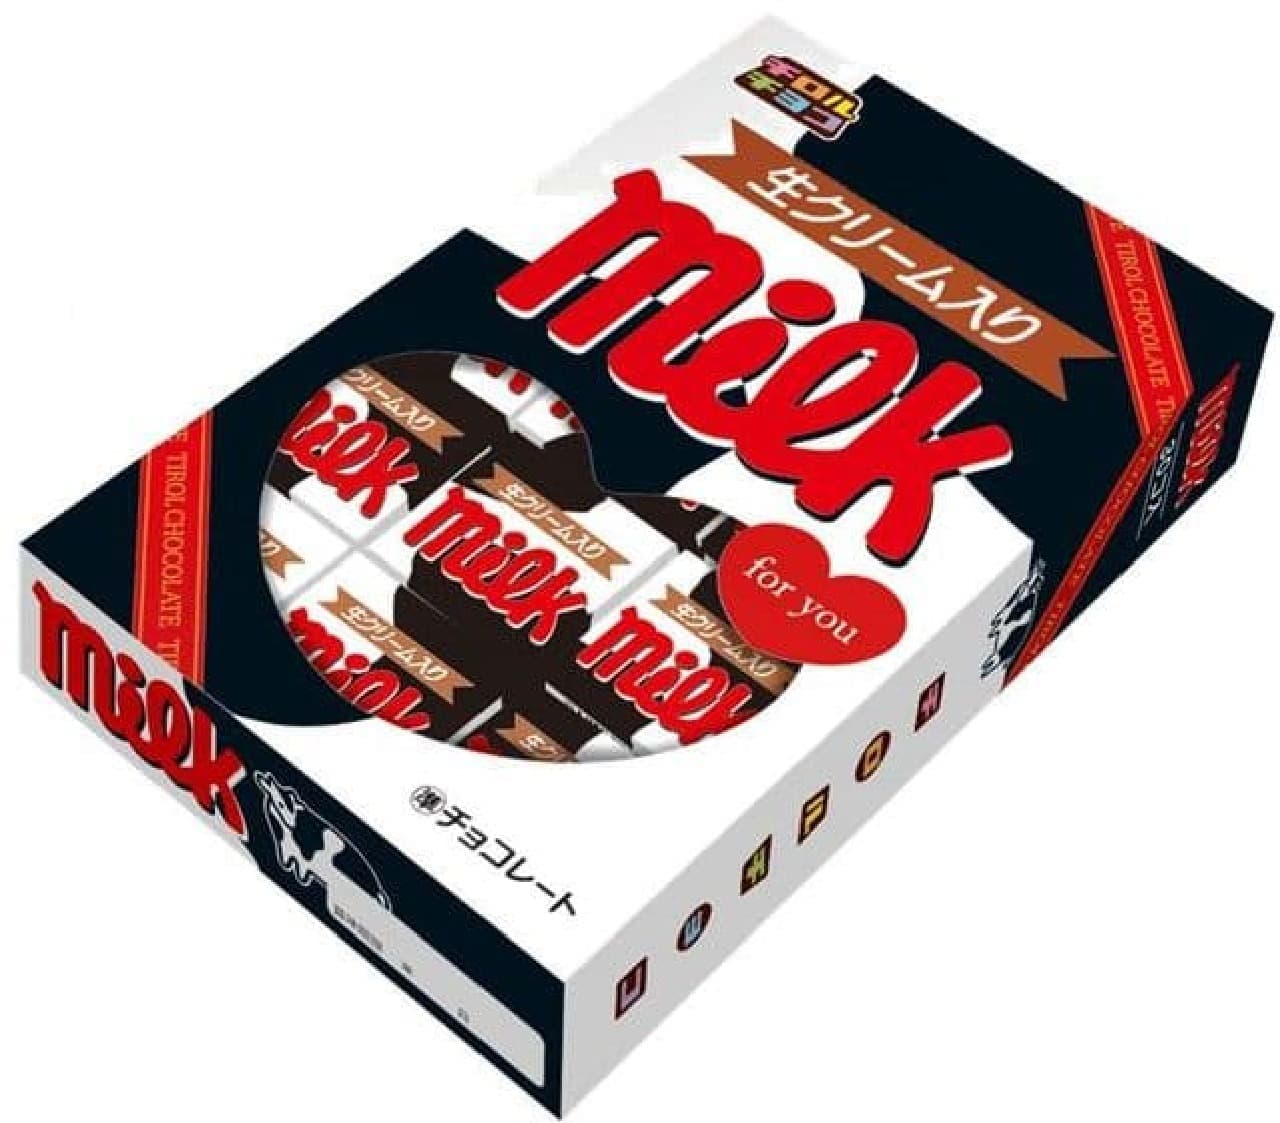 New Tyrolean chocolate product "Milk BOX"